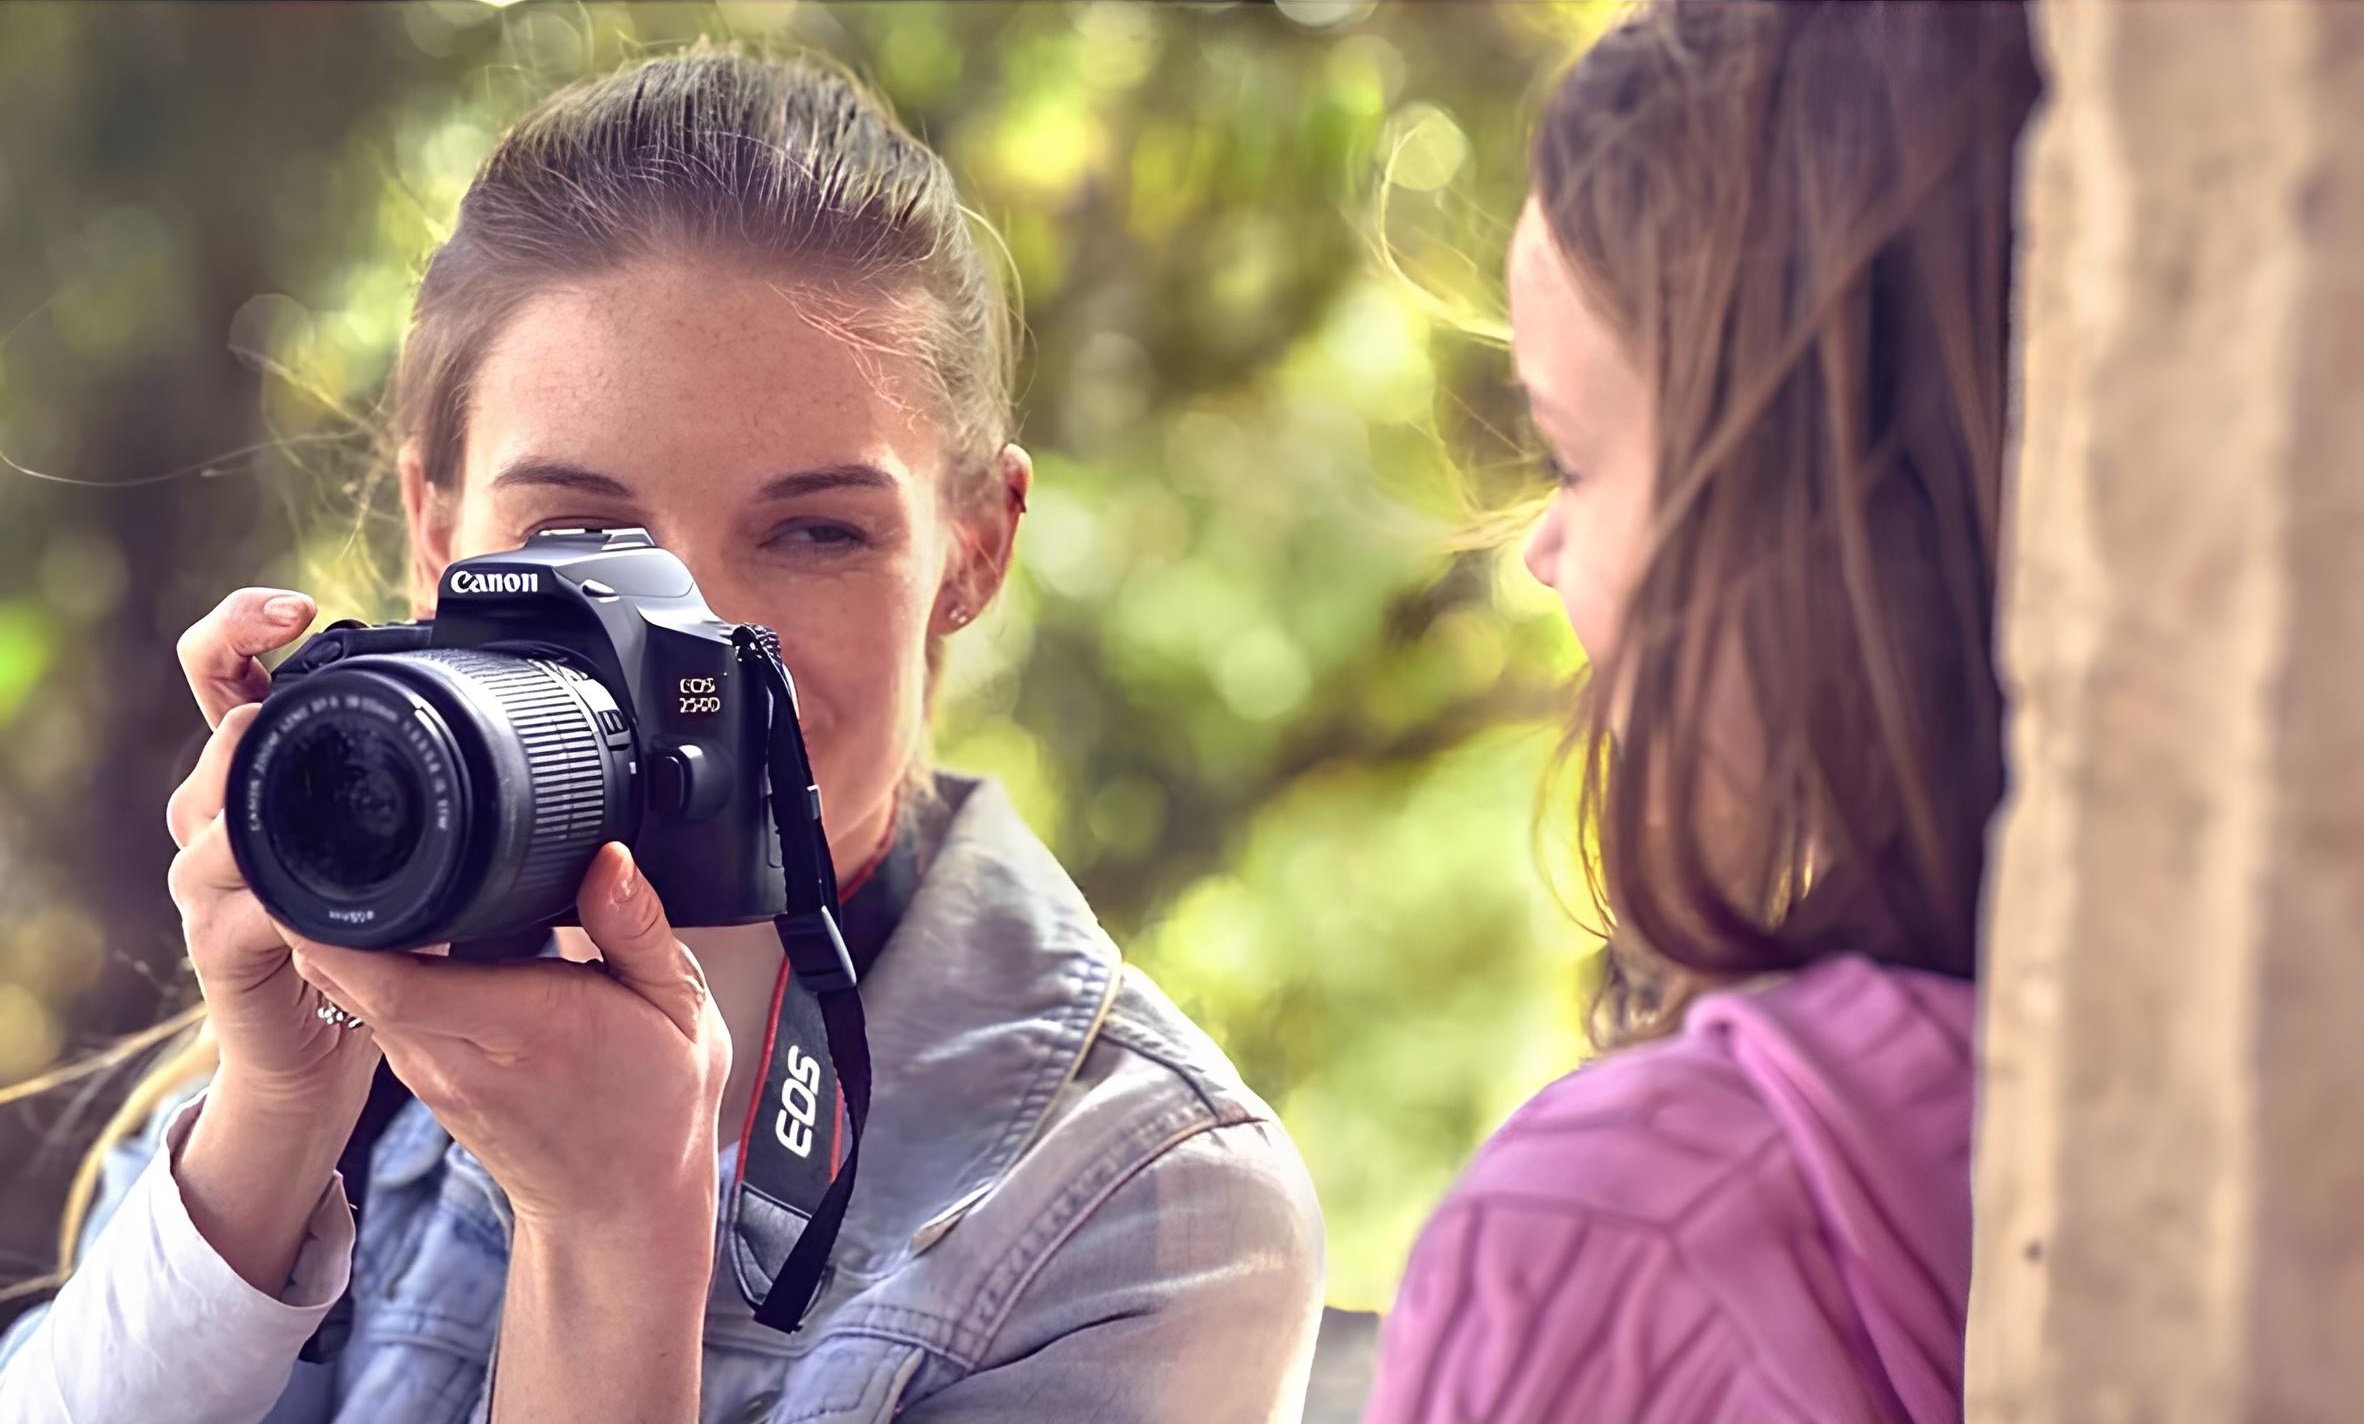 Canon EOS 250D / Rebel SL3 DSLR Camera with 18-55mm Lens (Black) + Creative Filter Set, EOS Camera Bag +  Sandisk Ultra 64GB Card + Electronics Cleaning Set, And More (International Model) - image 7 of 7